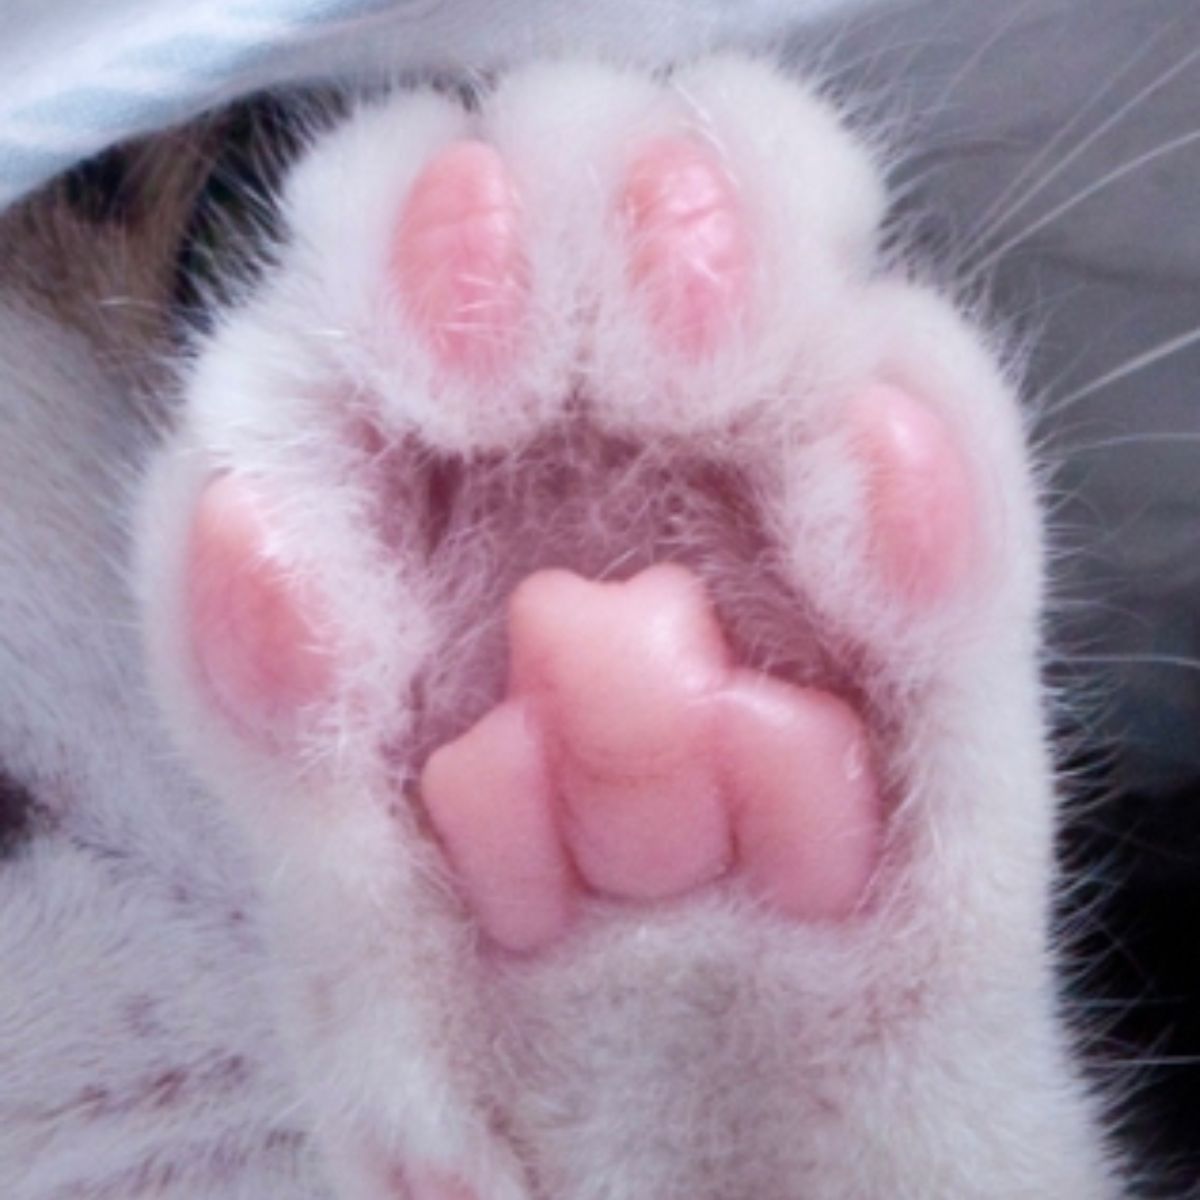 close-up photo of cat paw